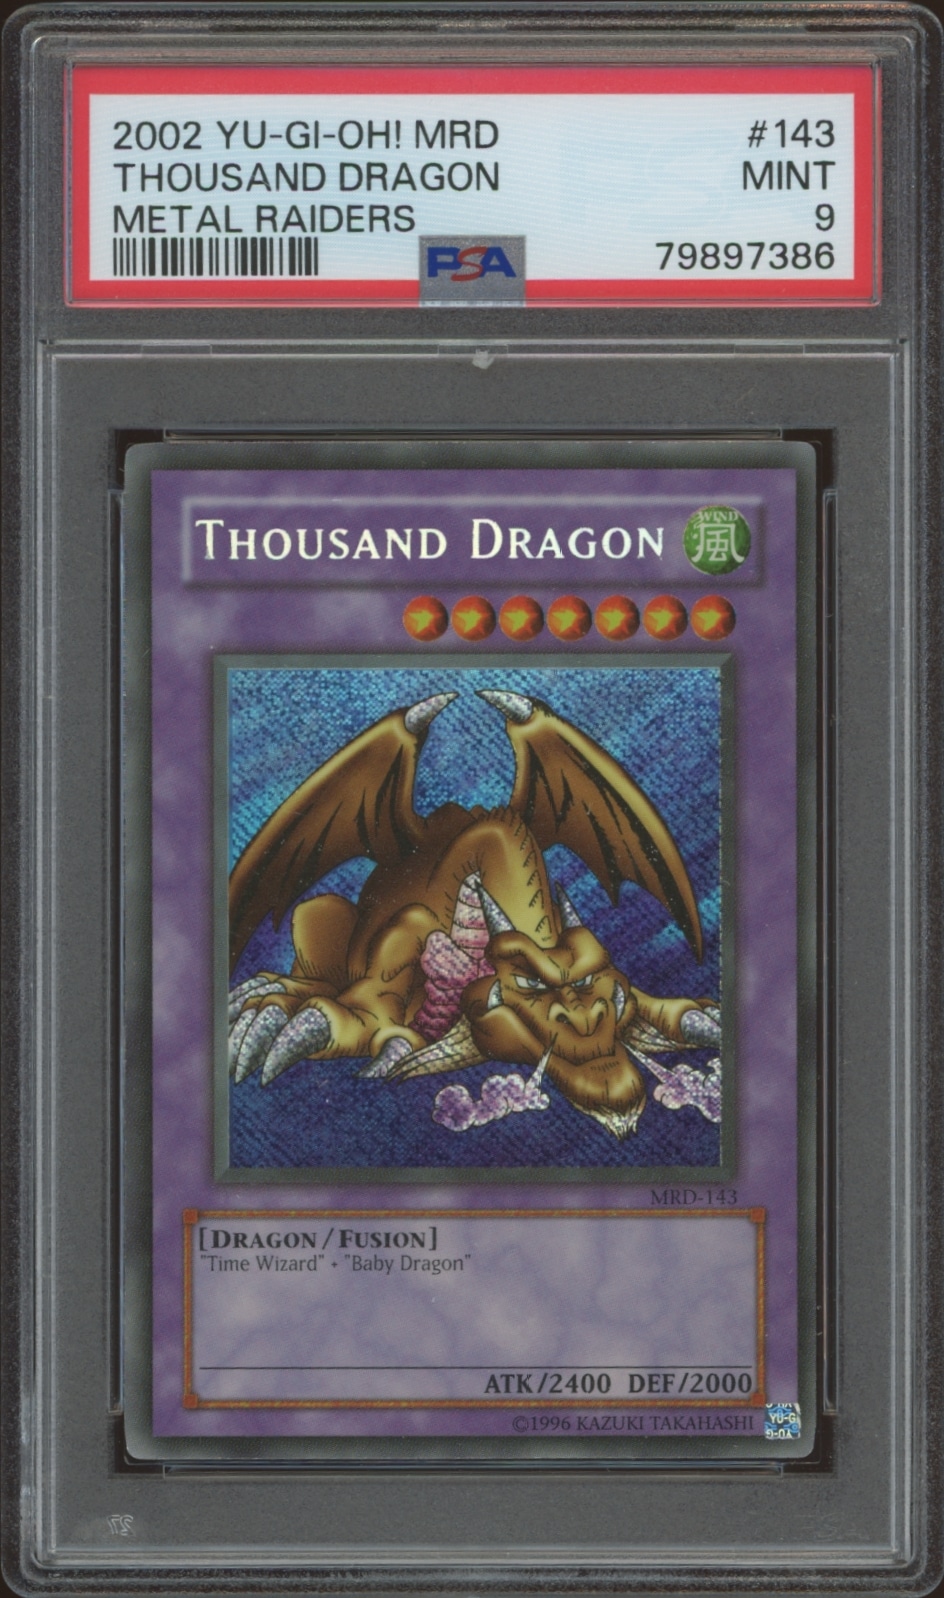 Graded MINT 9 Thousand Dragon Yu-Gi-Oh! card from 2002 Metal Raiders set.